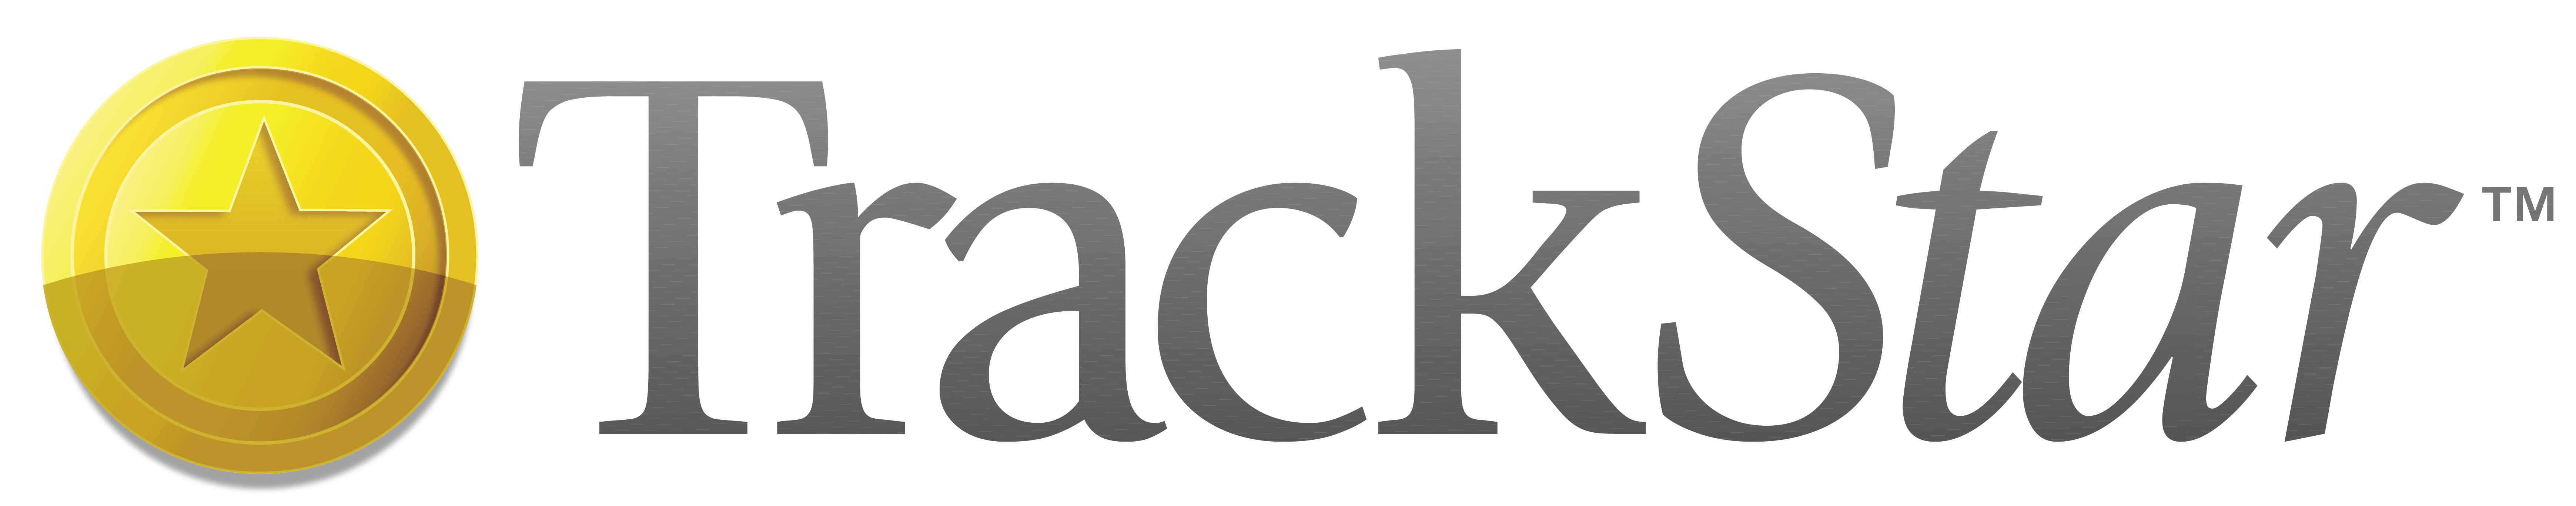 Trackstar Logo_CMYK